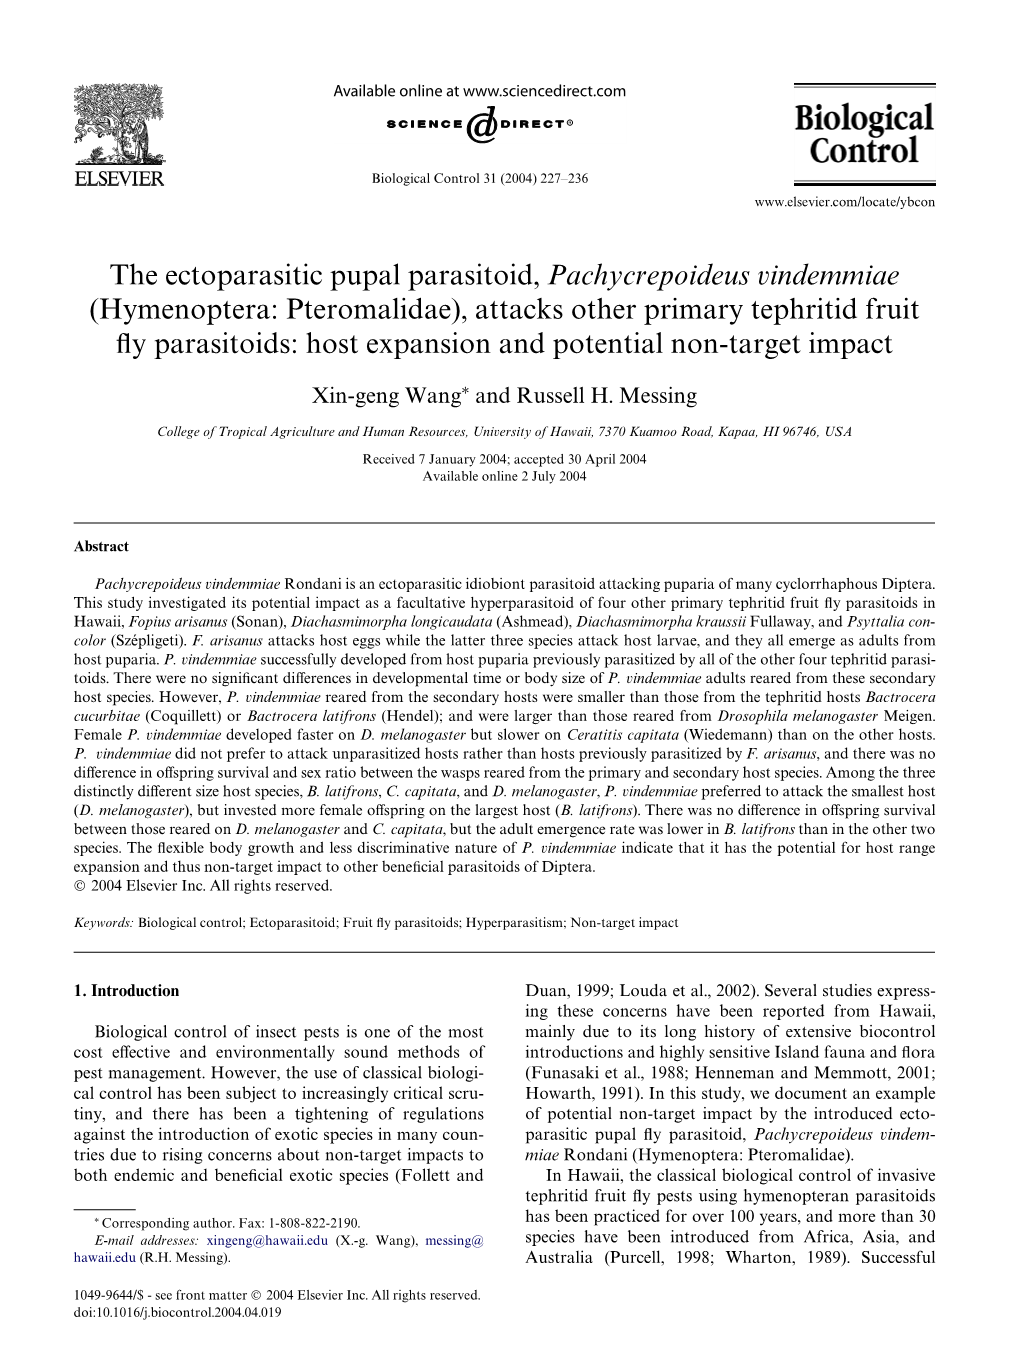 The Ectoparasitic Pupal Parasitoid